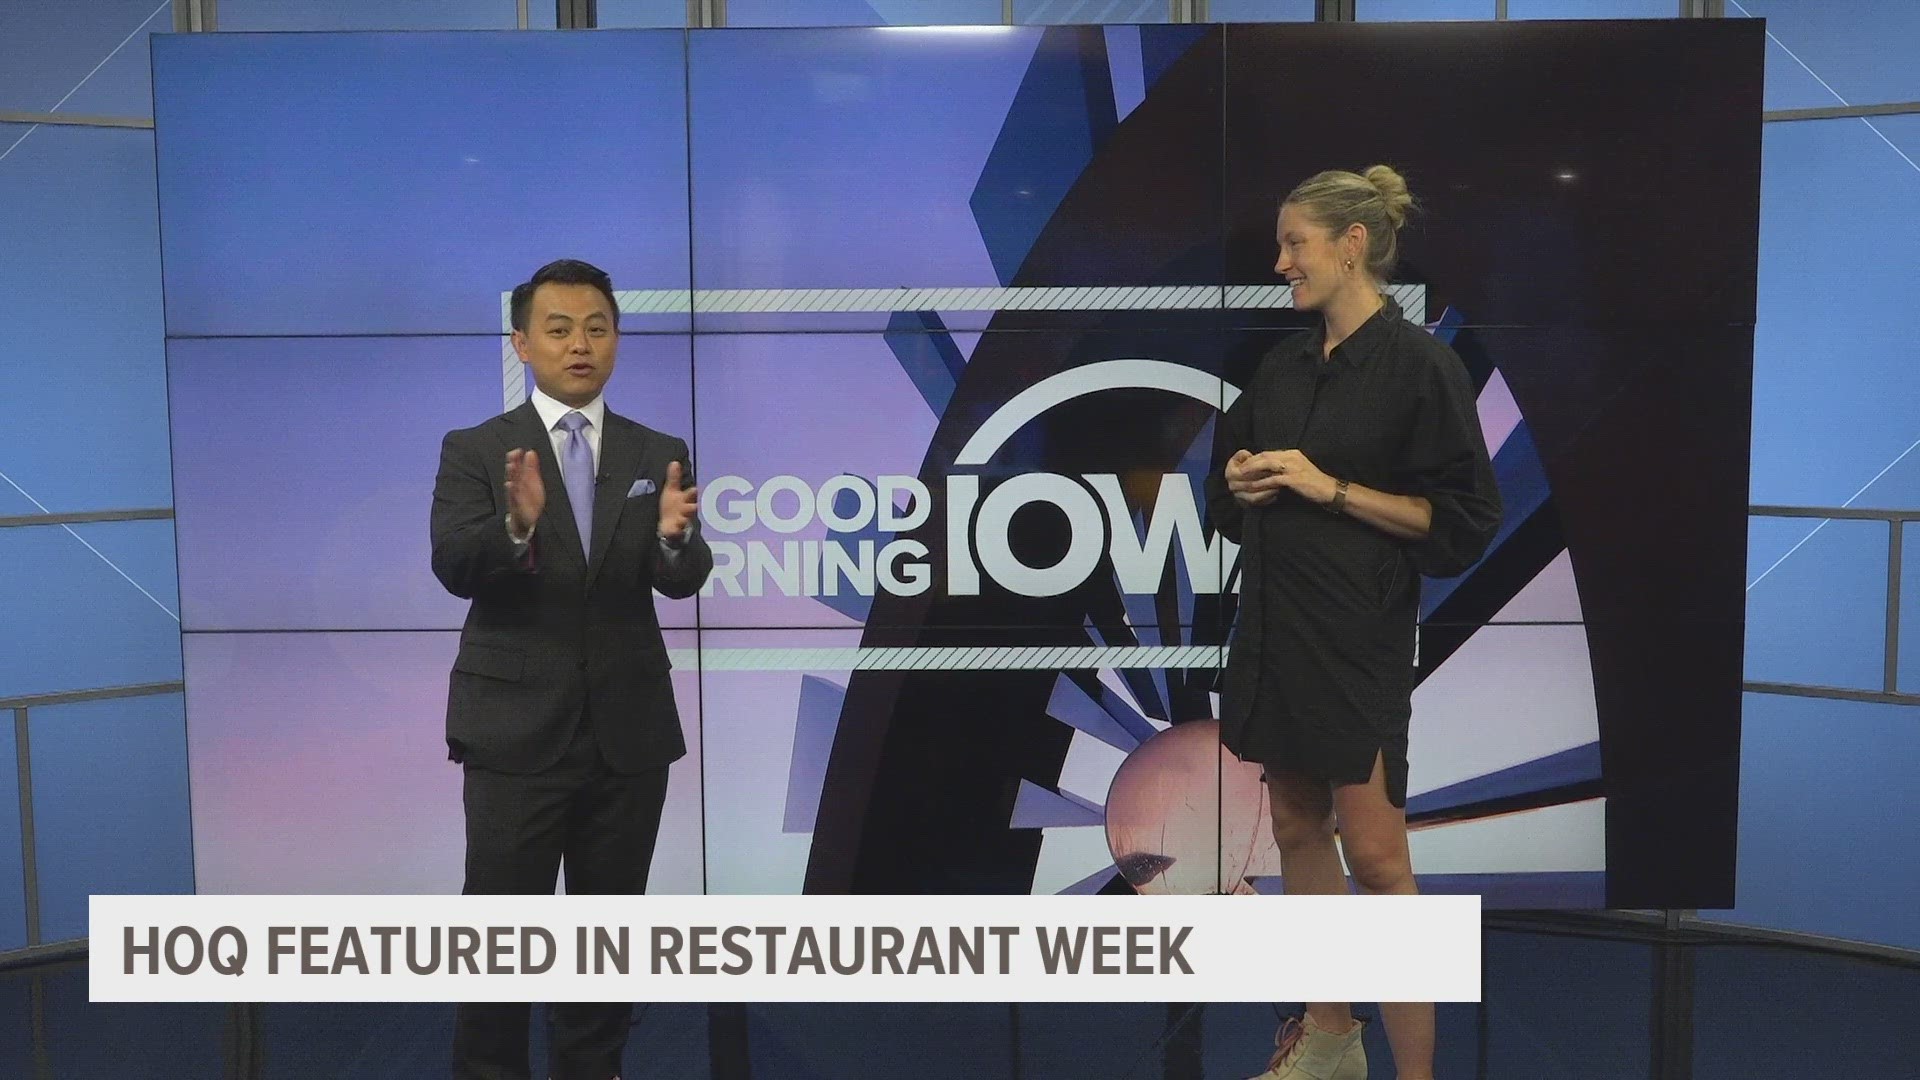 HoQ Restaurant shares more about DSM Restaurant Week